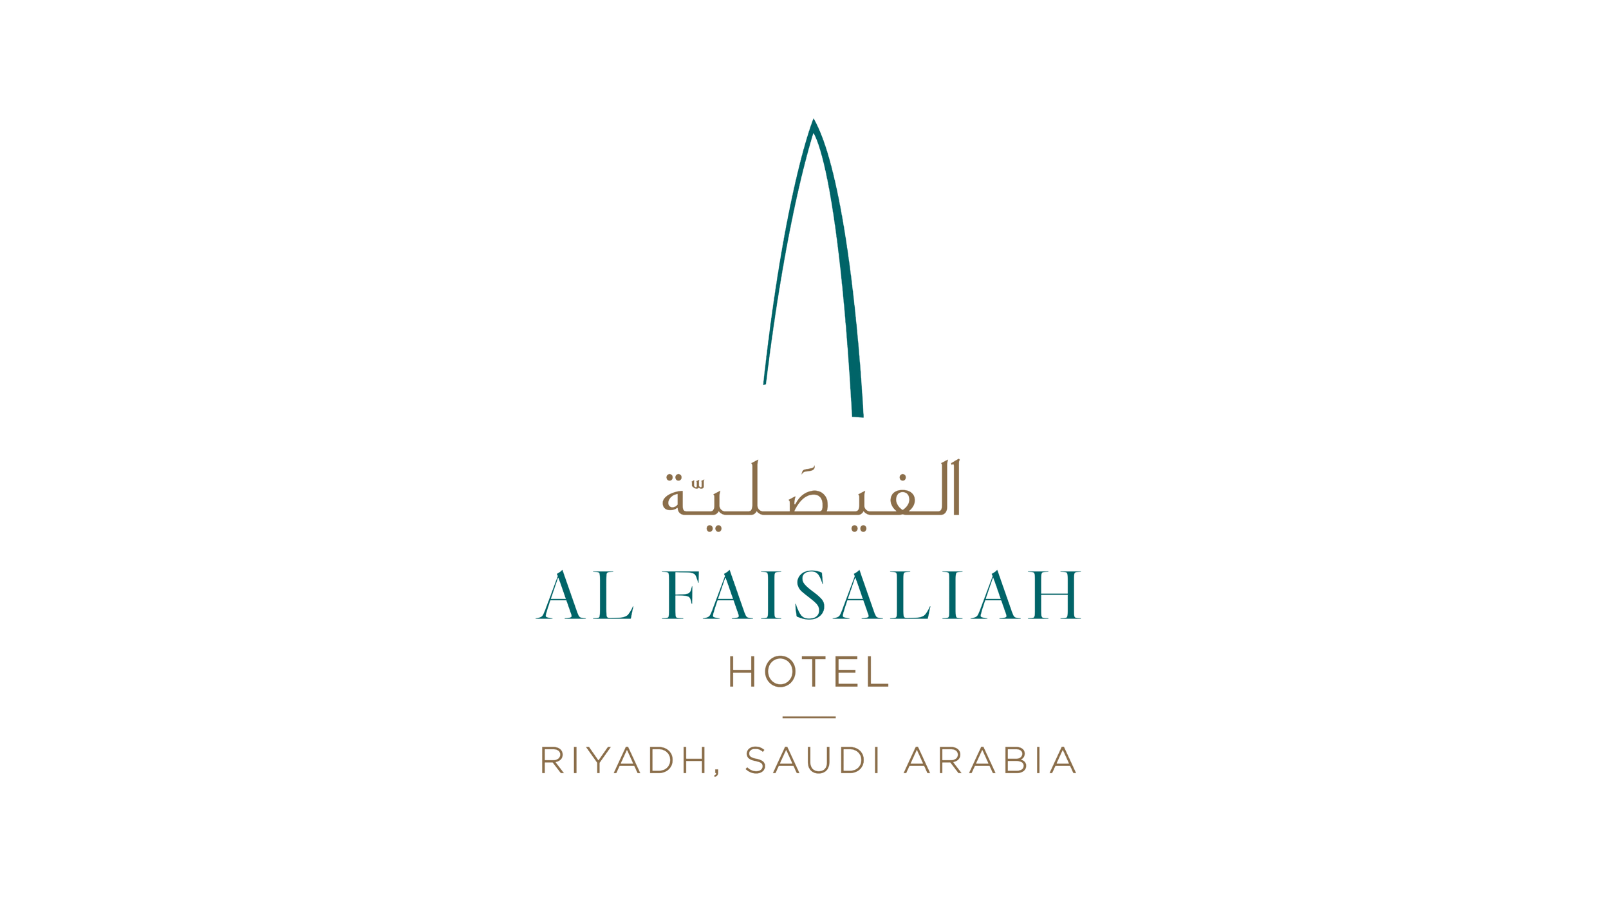 Al Faisaliah Hotel logo